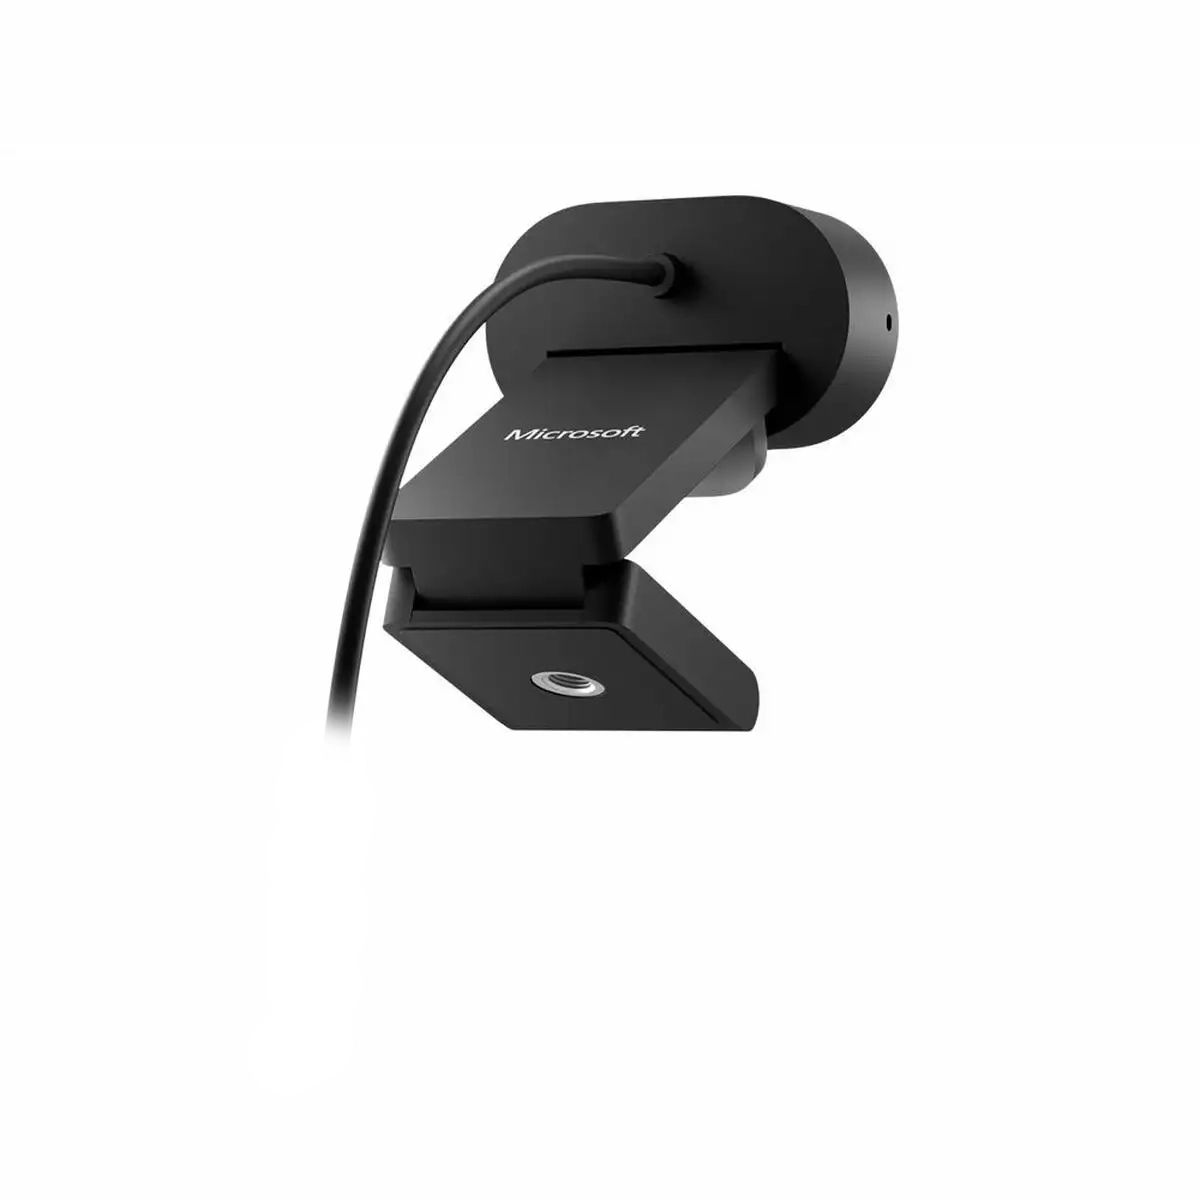 8L3-00005 - WebCam Microsoft Modern FHD 1080p USB Micrfono Cable 1.5m Negra (8L3-00005)